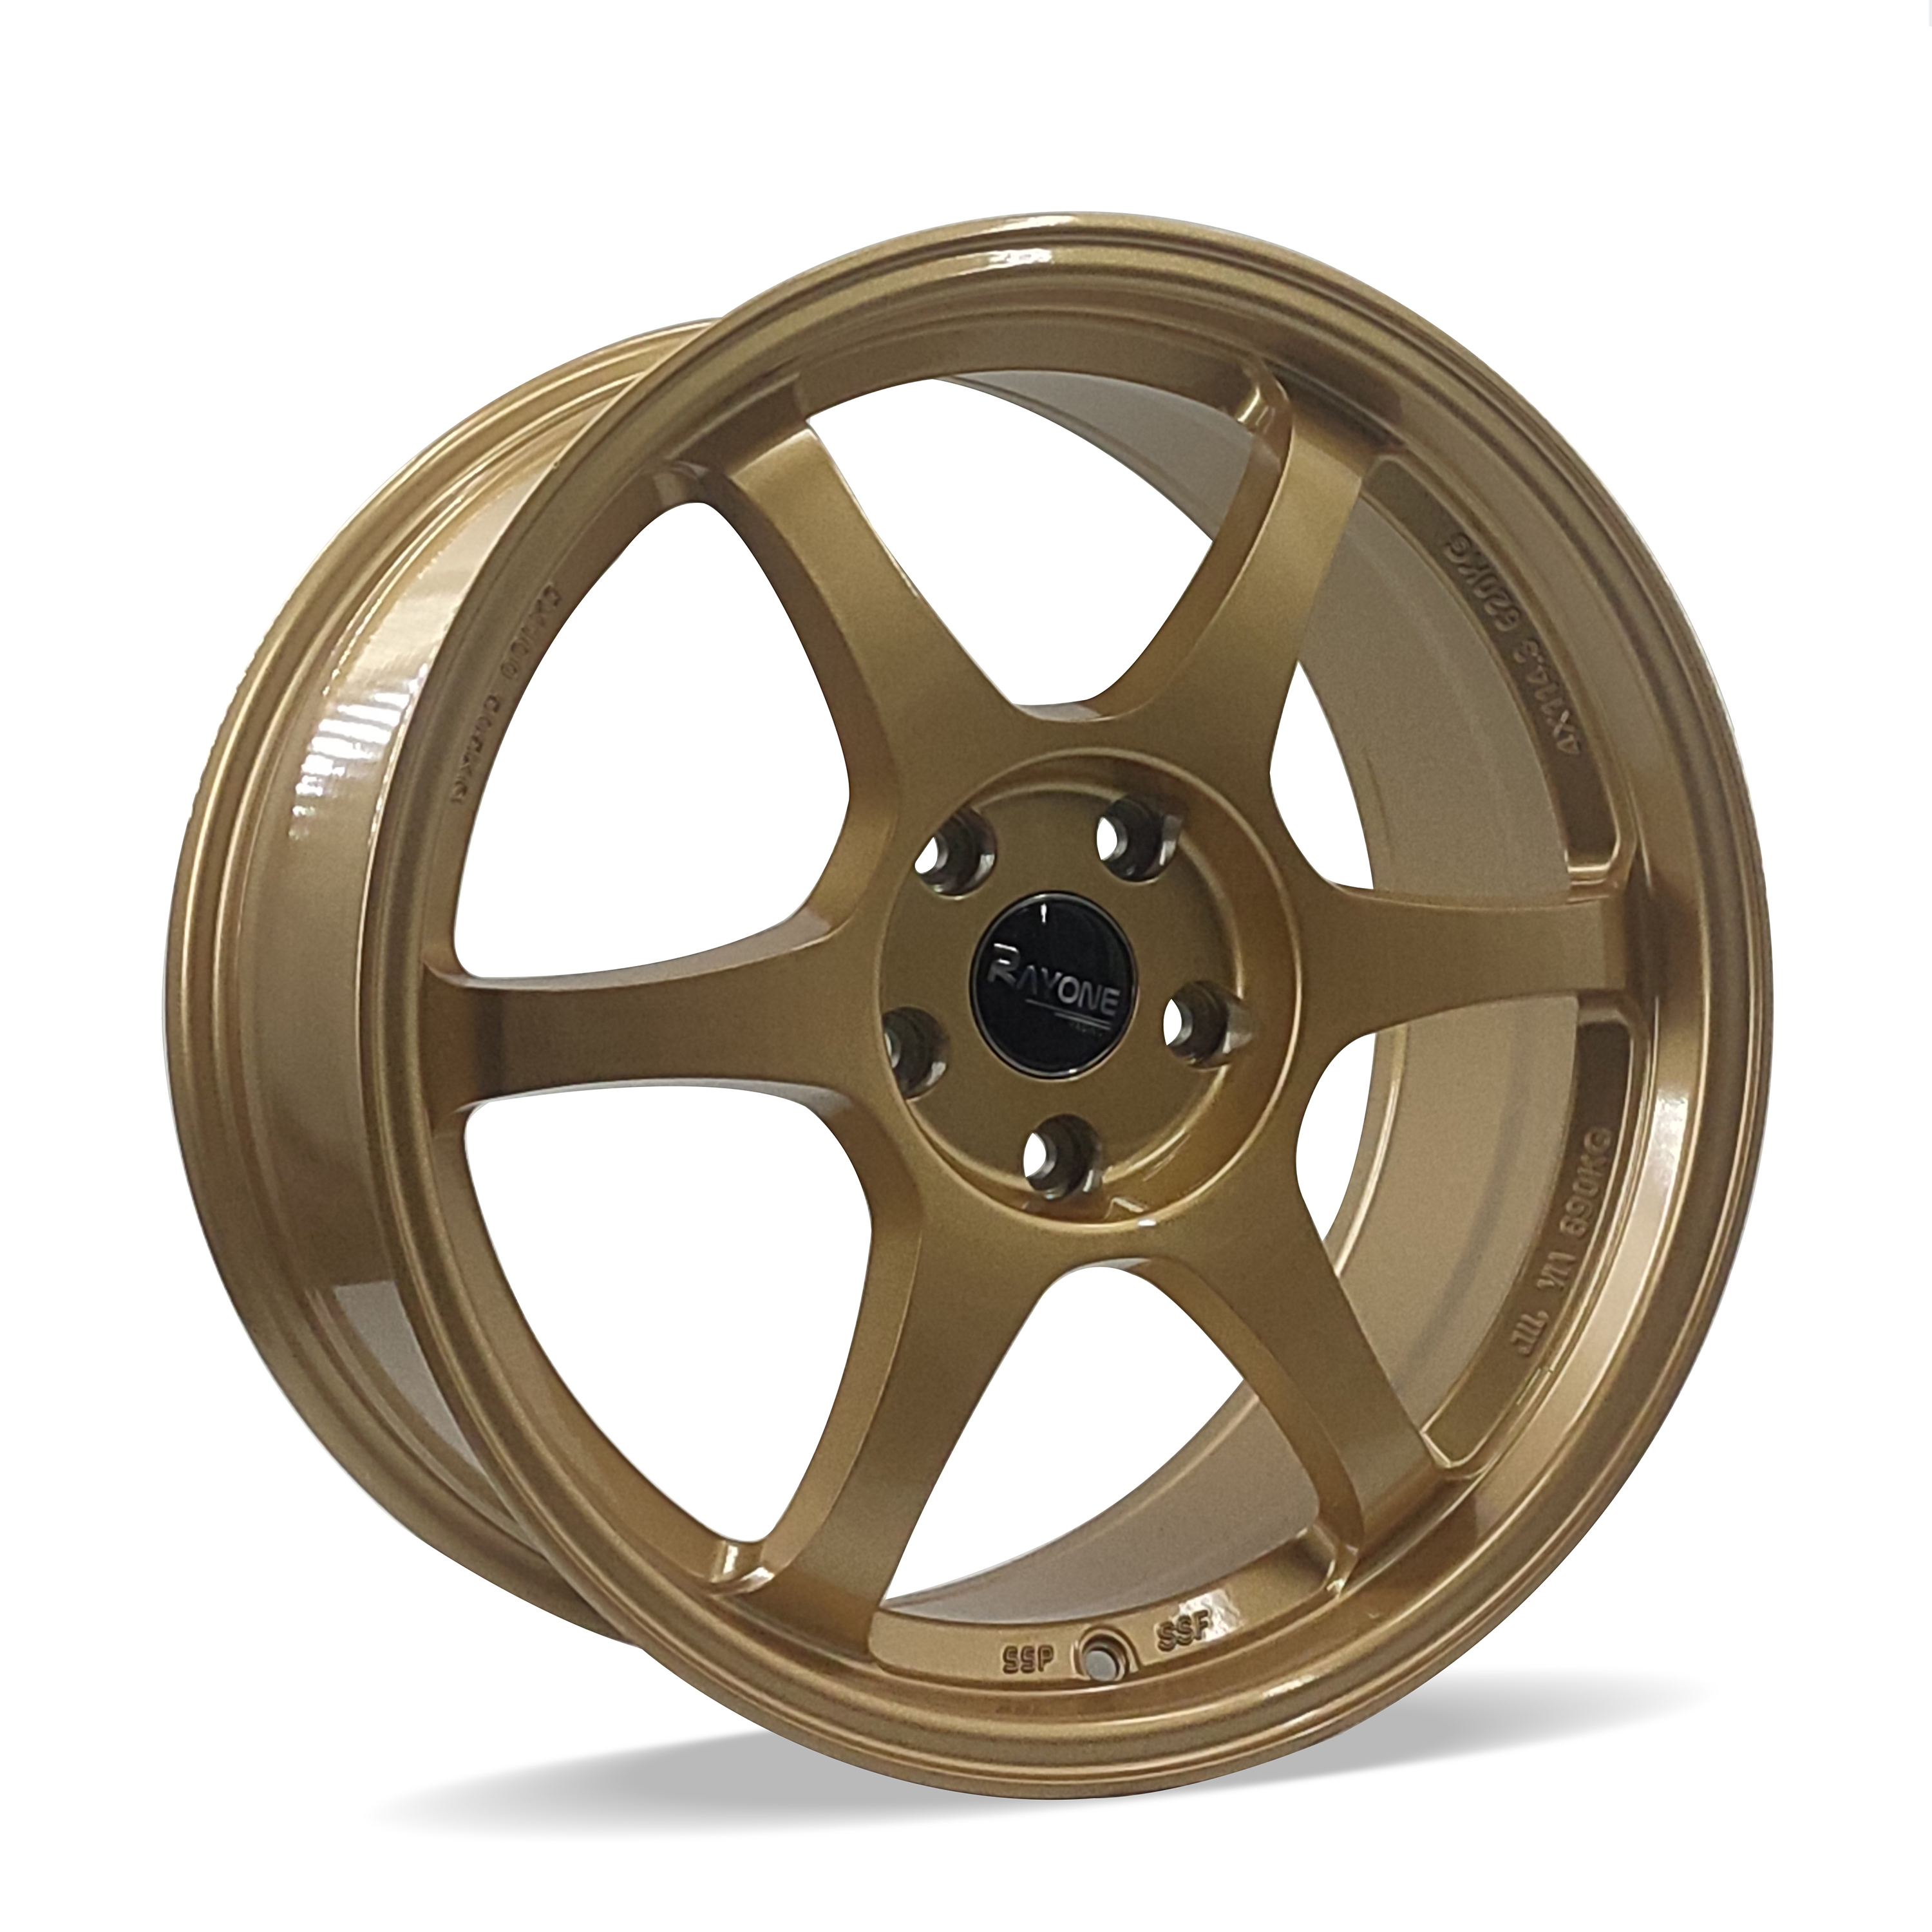 Rayone Wheels 18inch 5×114.3 Gold finish Six Spoke Wheels Wholesale